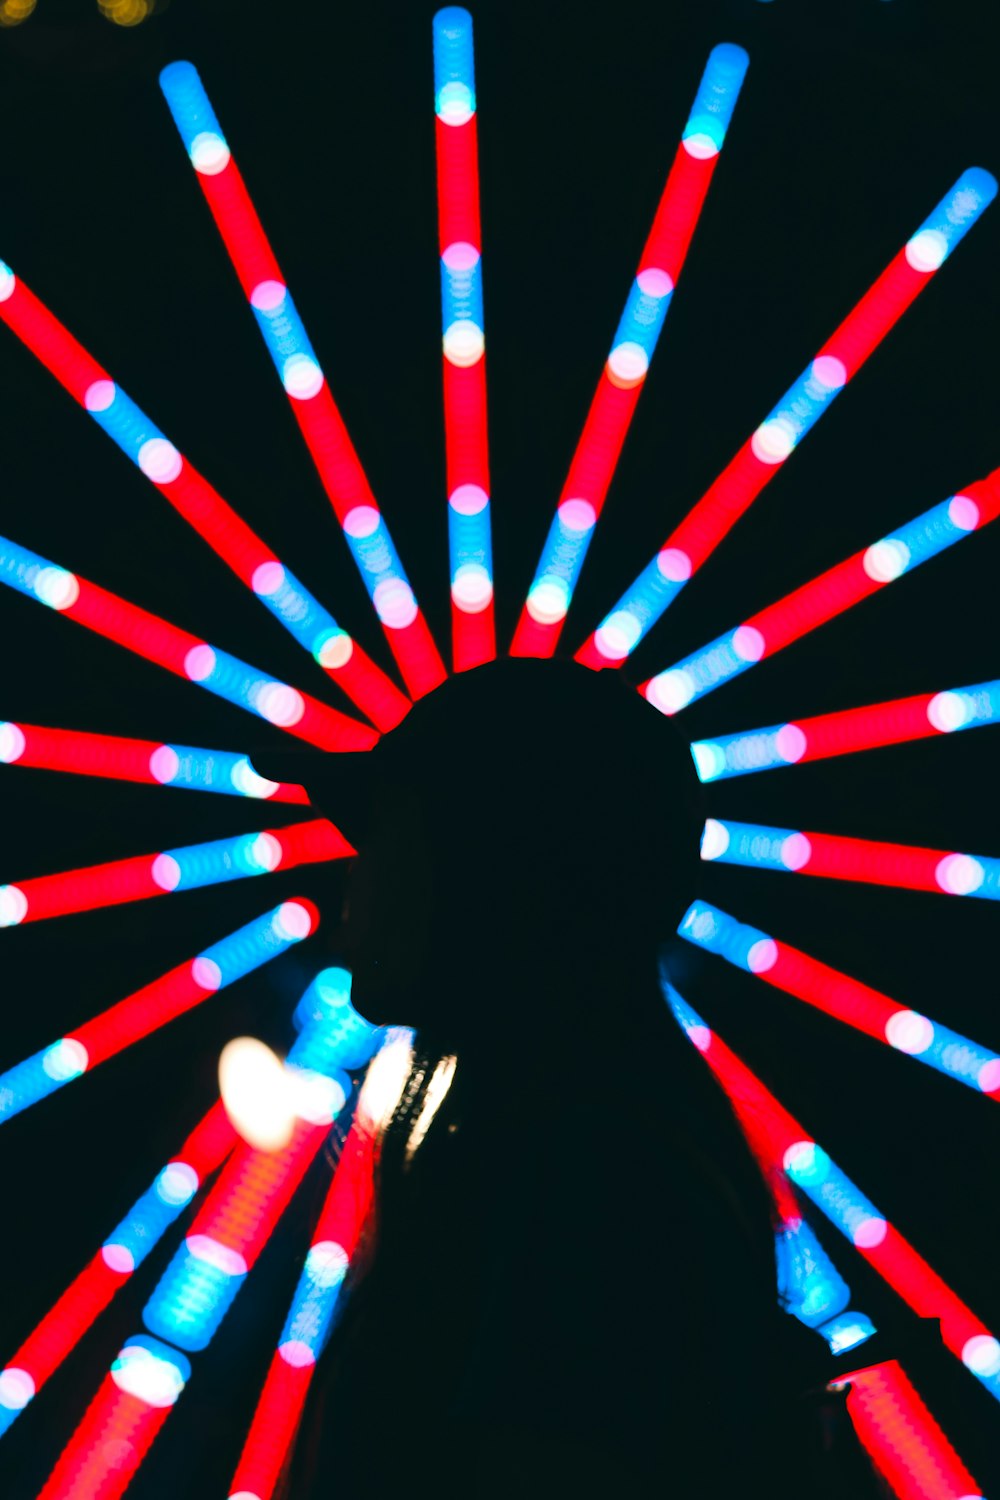 Una persona in piedi davanti a una ruota panoramica con luci rosse, bianche e blu